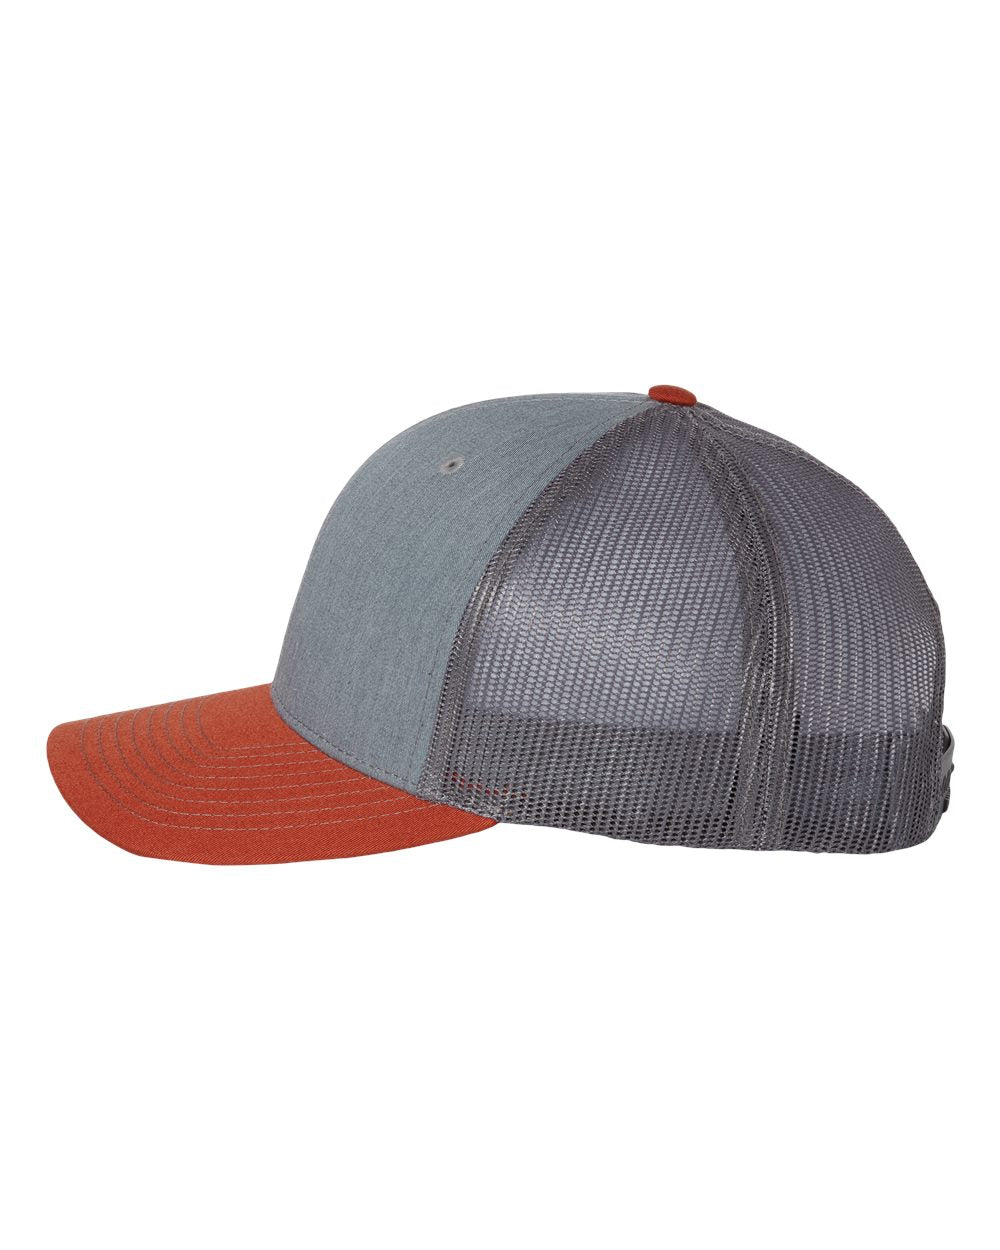 Richardson Adjustable Branded Snapback Trucker Caps, Heather Grey Charcoal Dark Orange